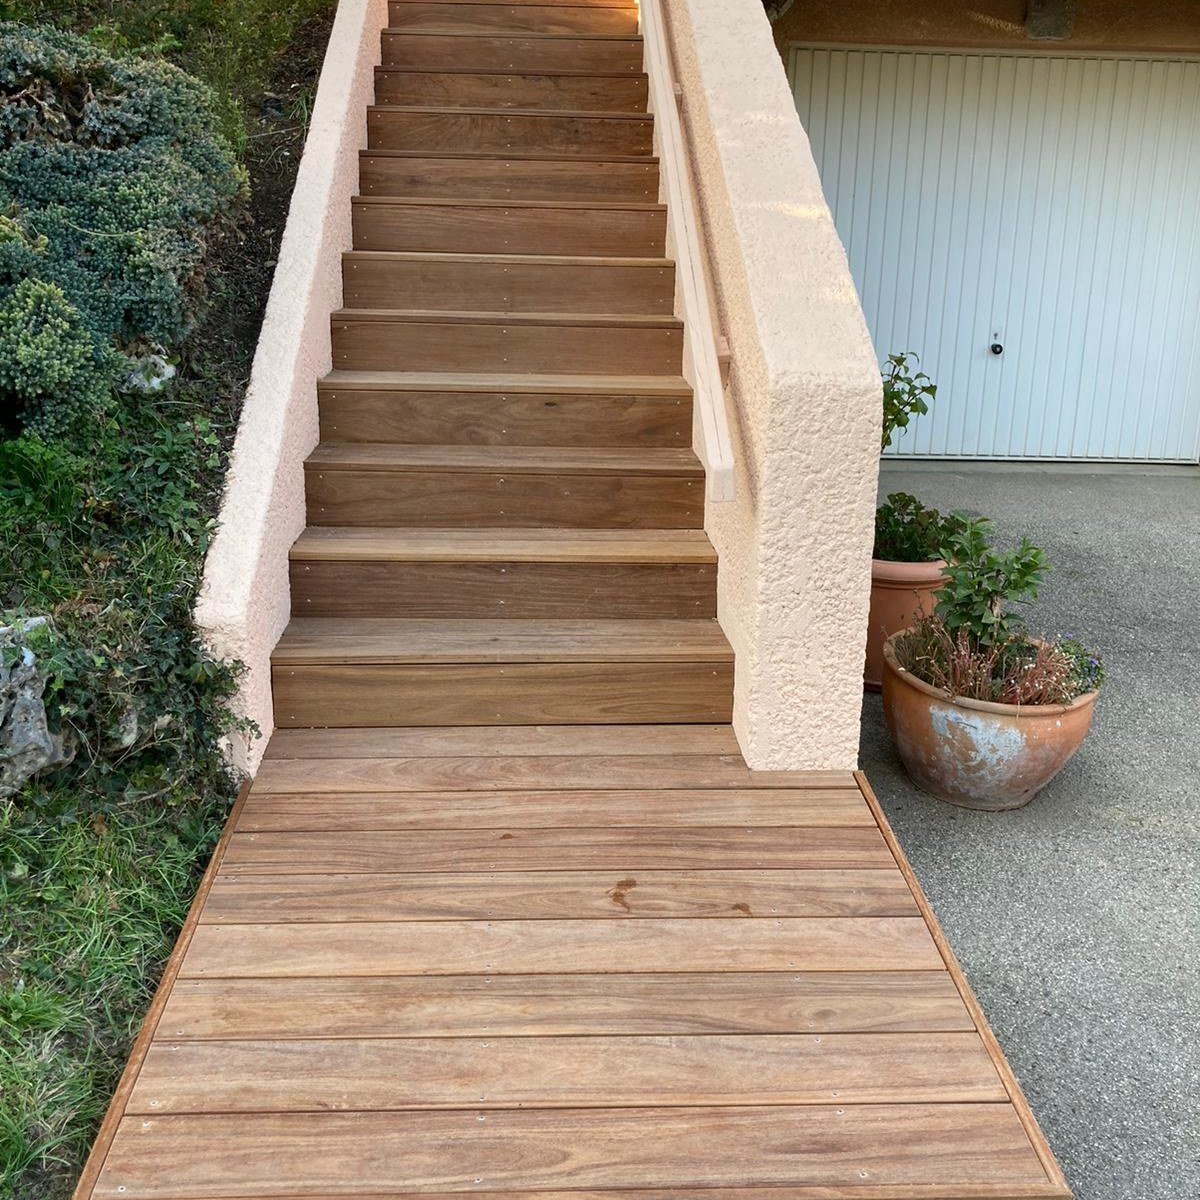 Terrasse bois escalier lyon